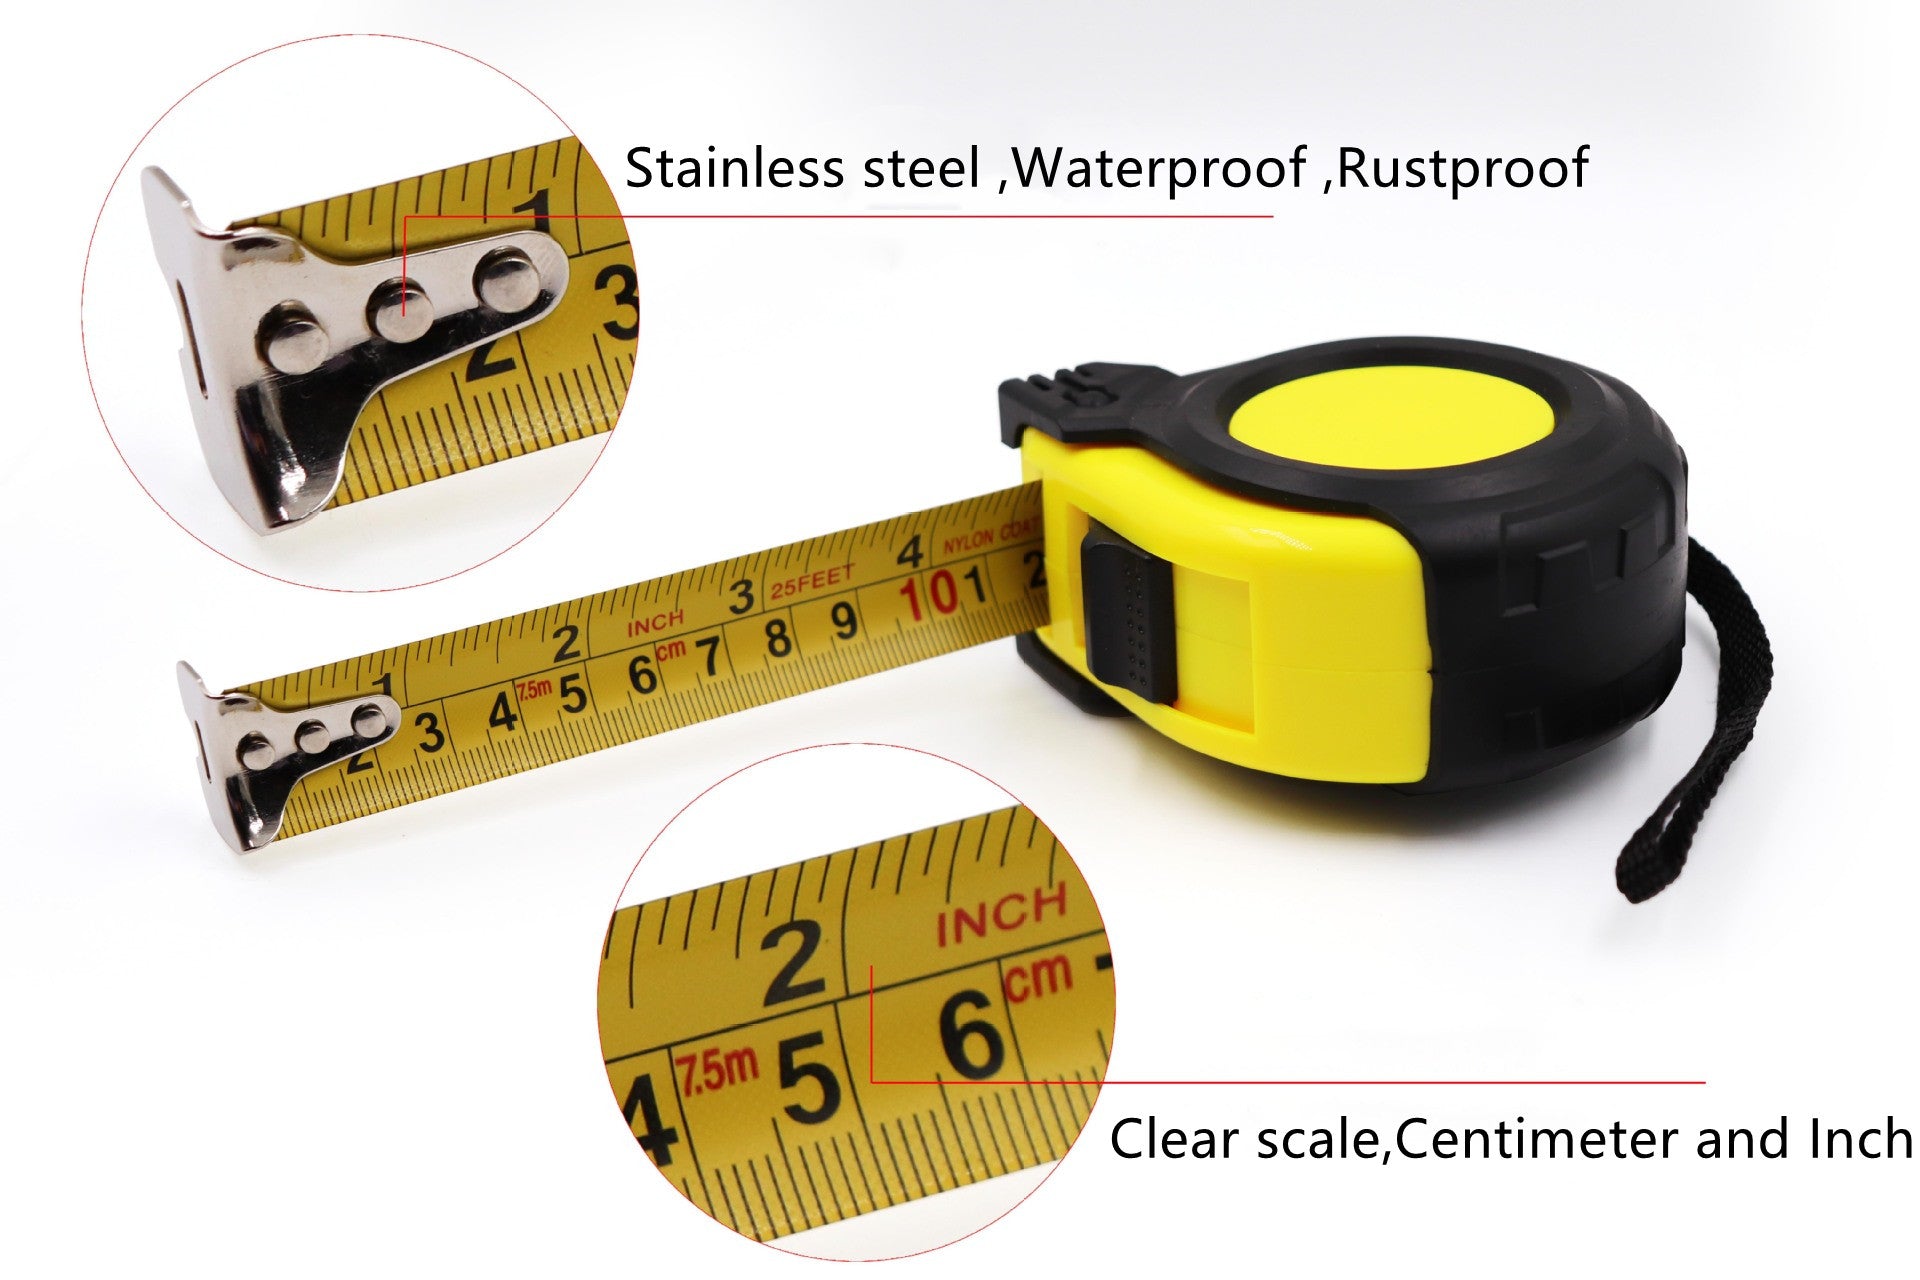 WINTAP 5M 7.5M 8M Metric Steel Tape Measure Locator Clip Sets Woodworking Construction Tool Waterproof CM Inch Measuring Tape